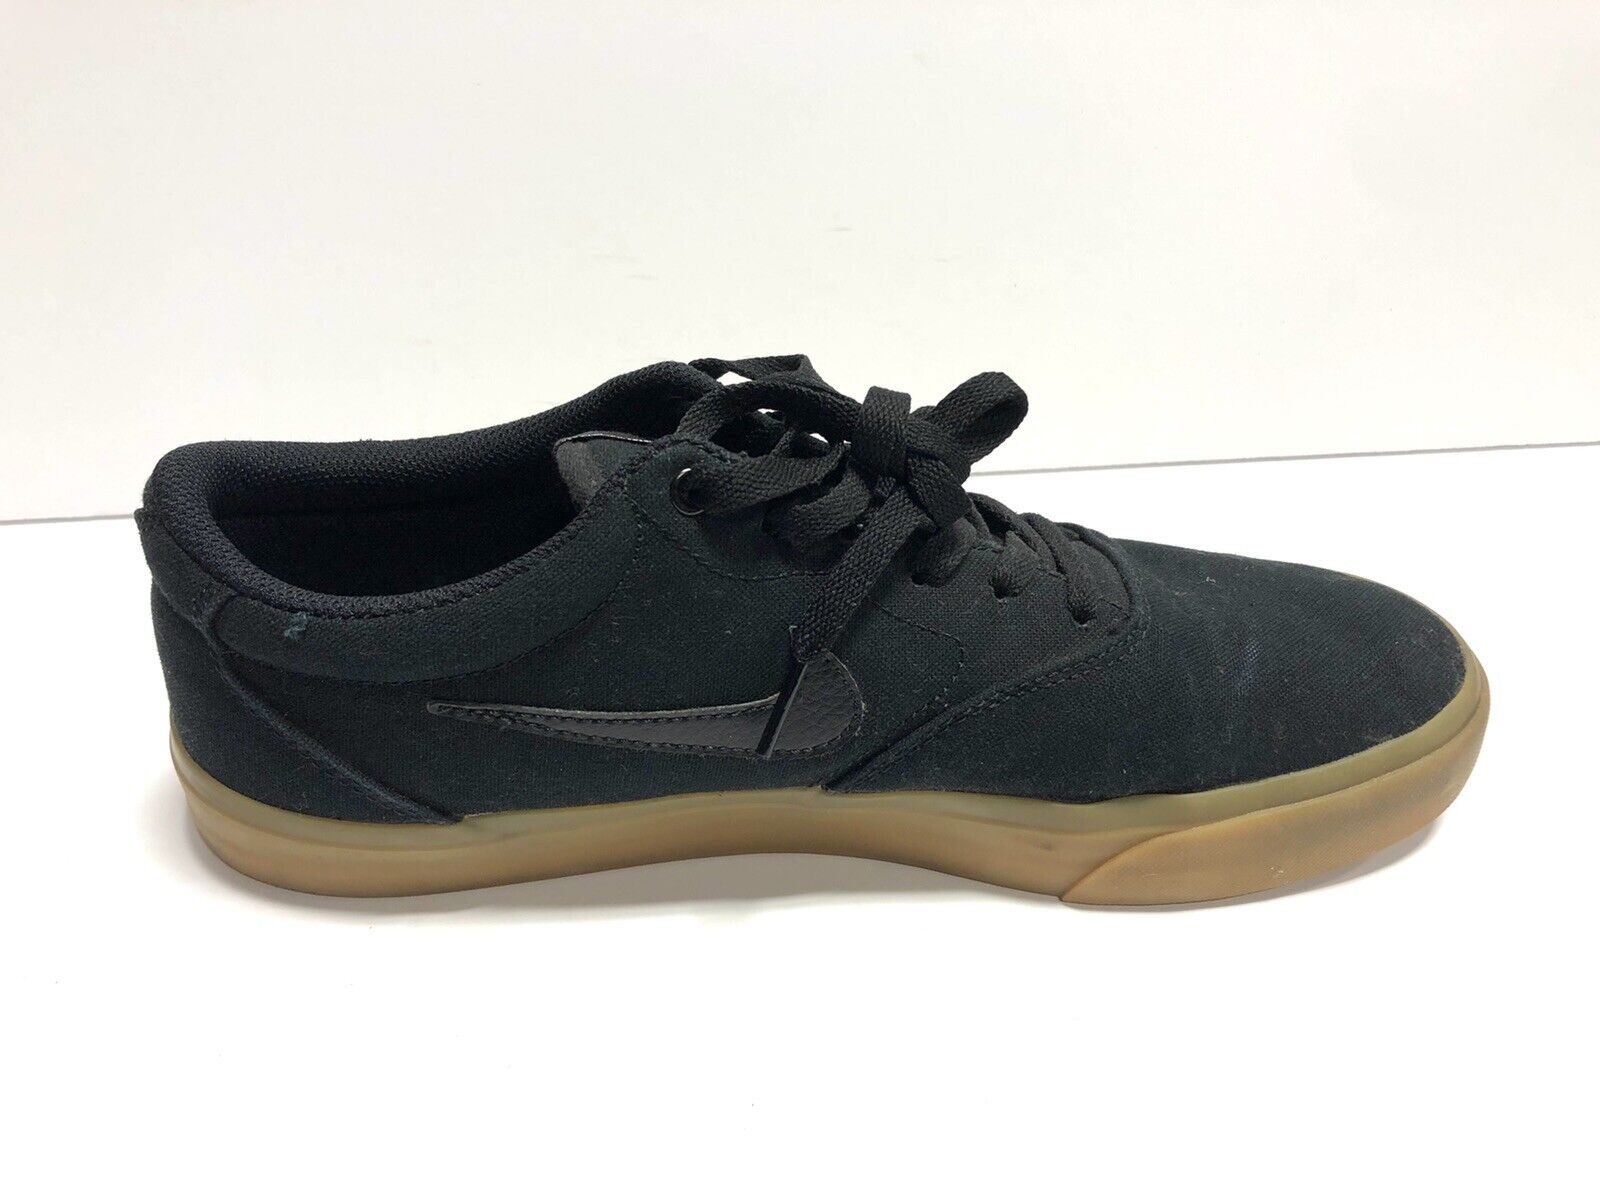 Nike Men’s SB Charge Black Athletic Shoes Size 11M - image 2